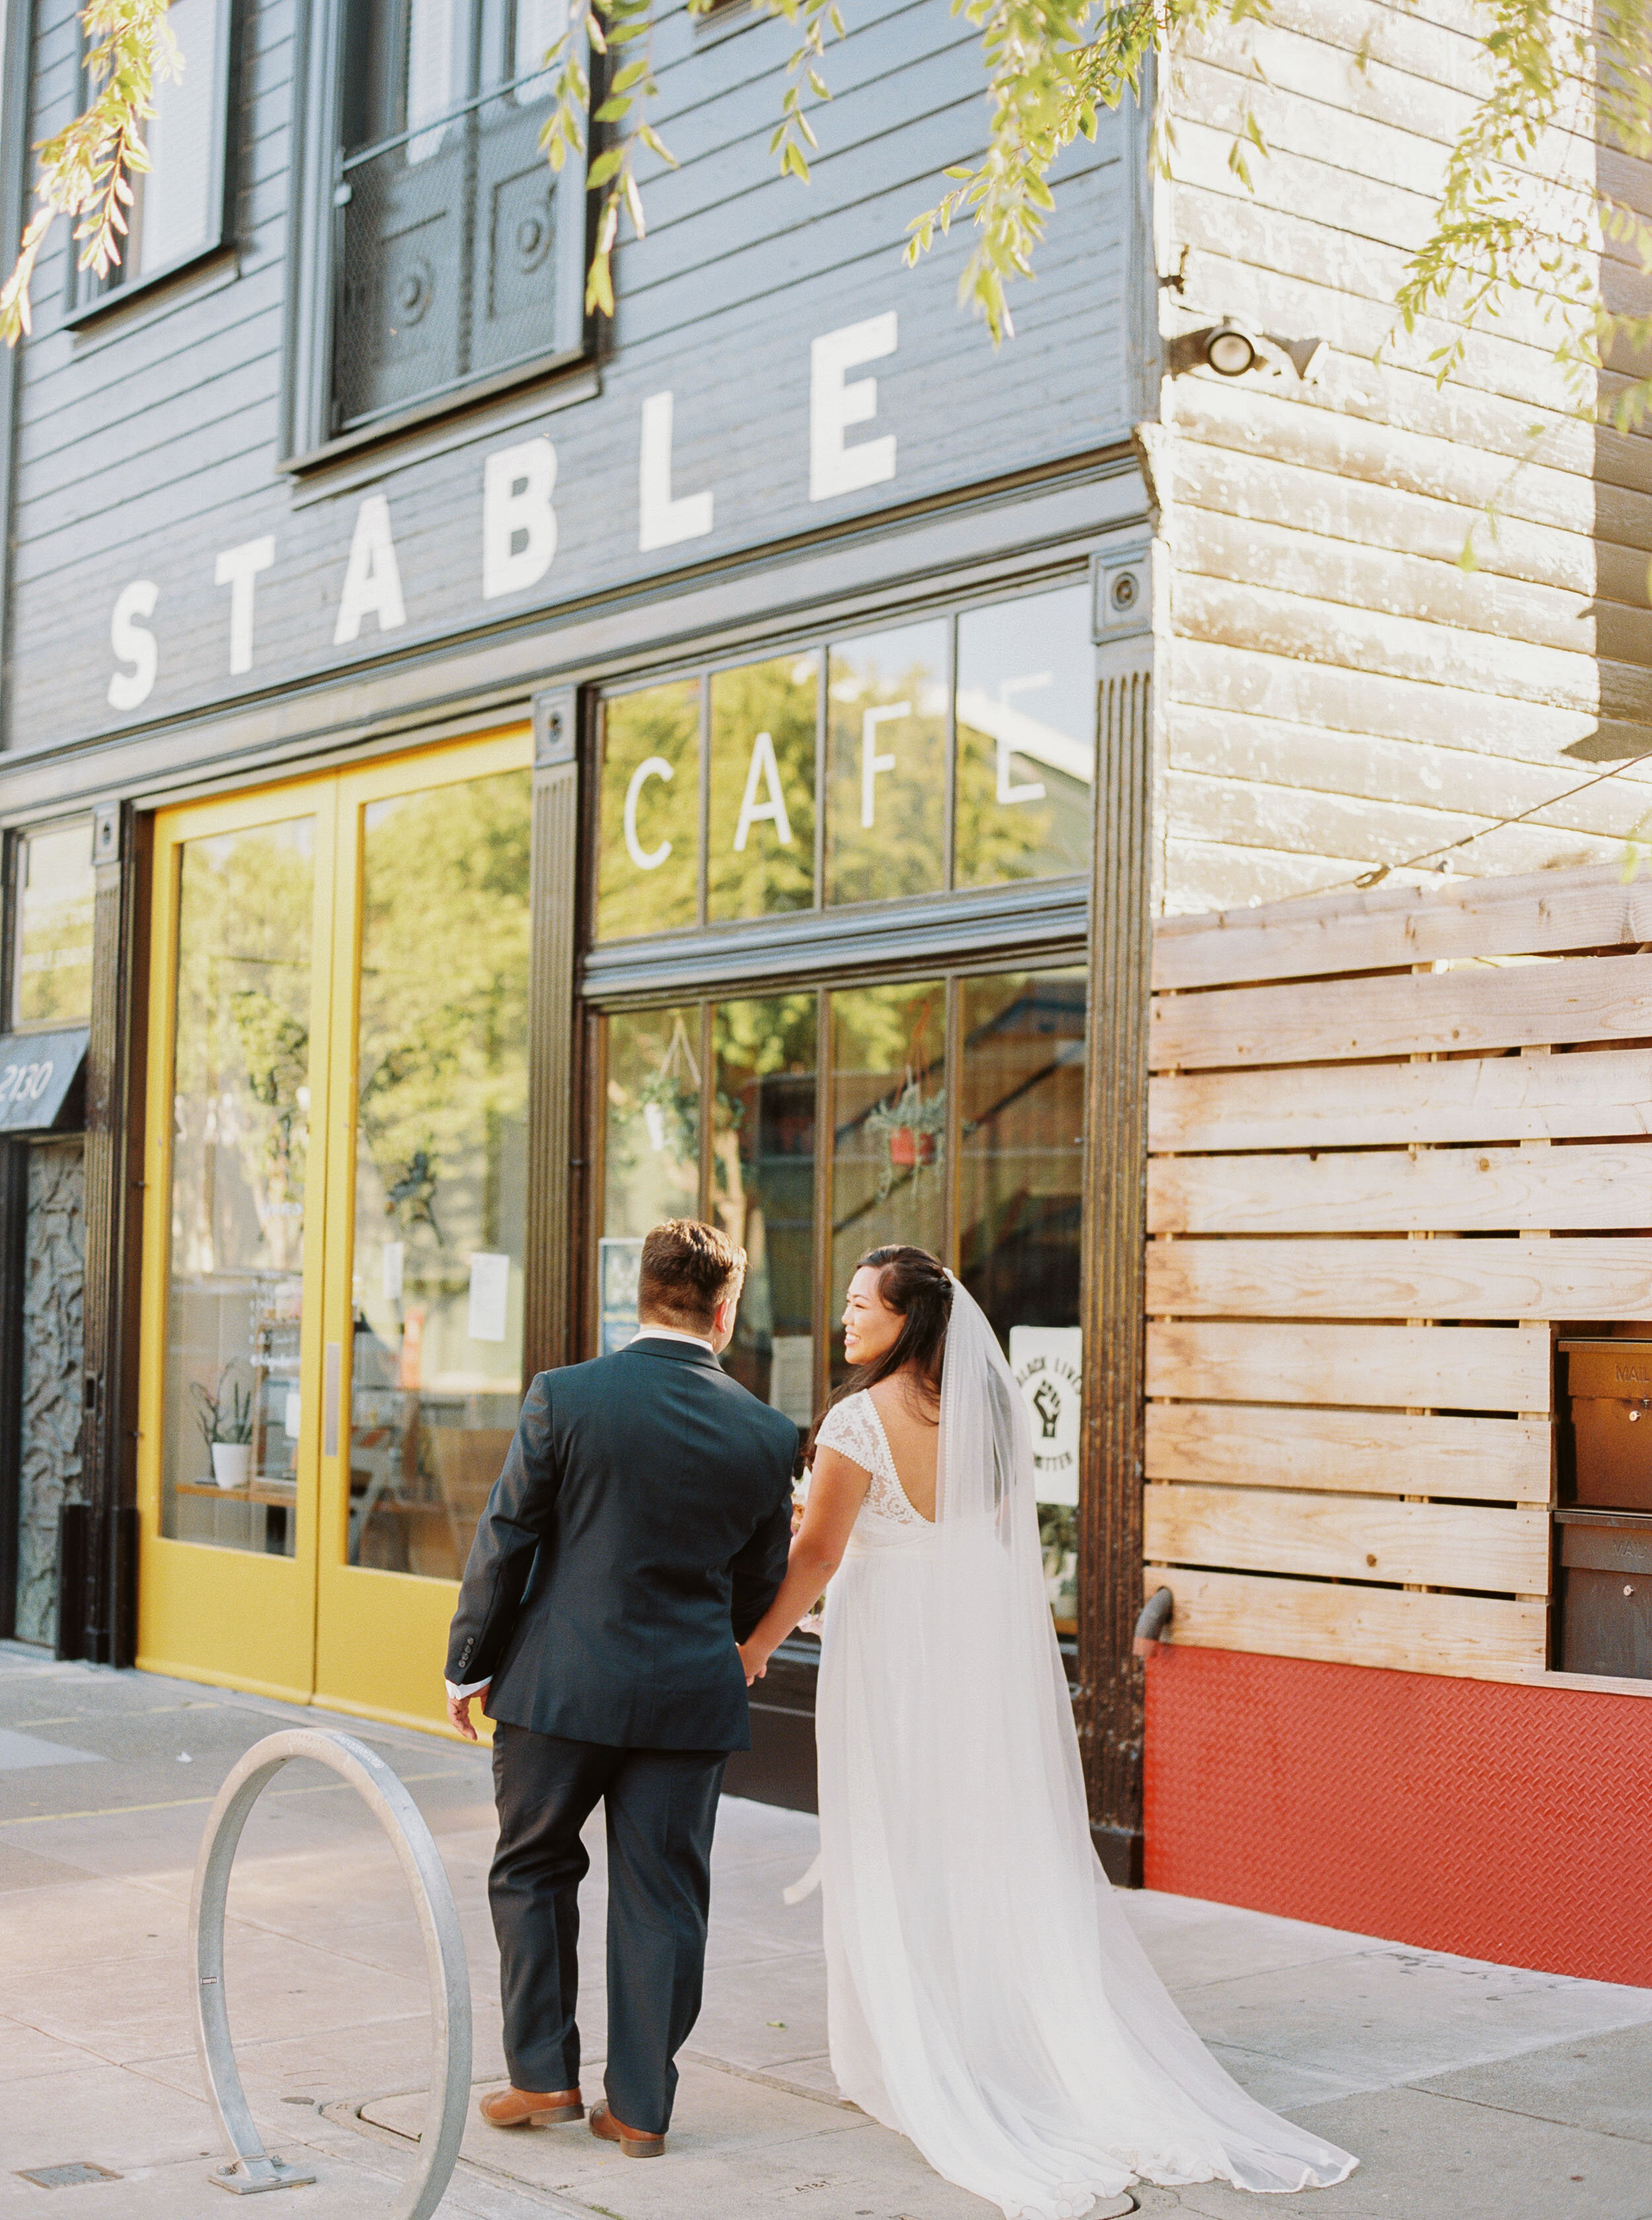 Stable Cafe wedding-35.jpg